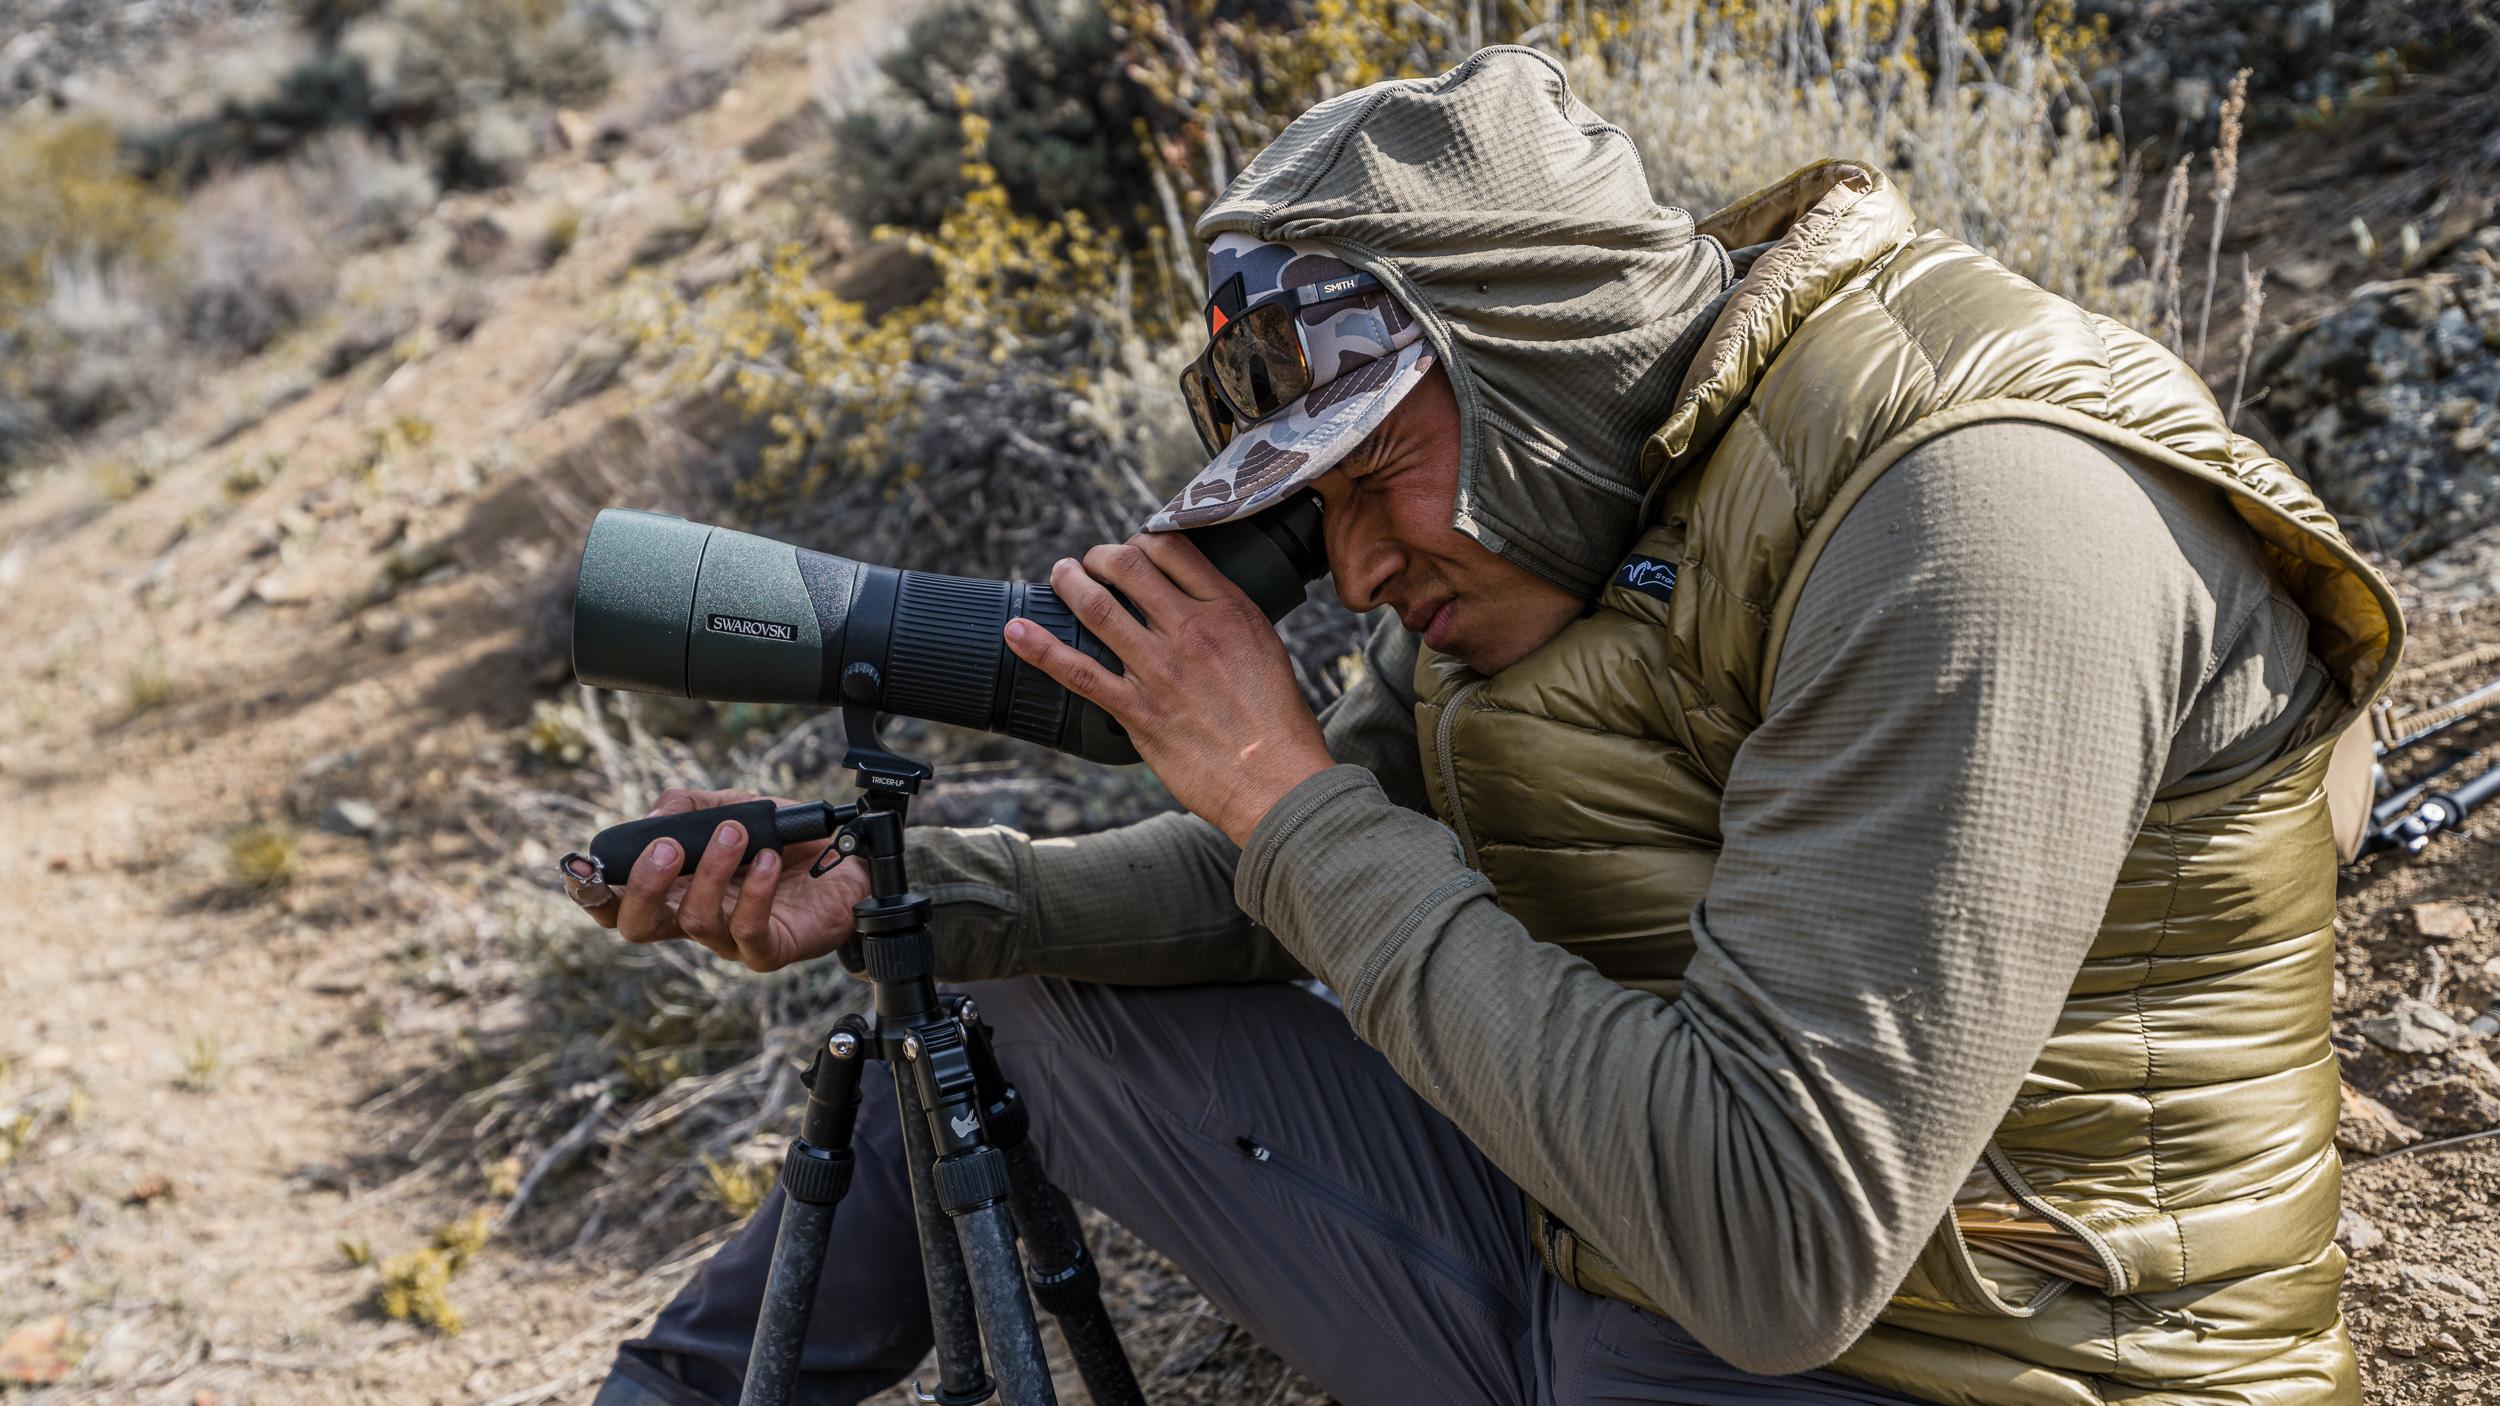 Omar Lopez glassing with Swarovski 65mm ATX spotting scope